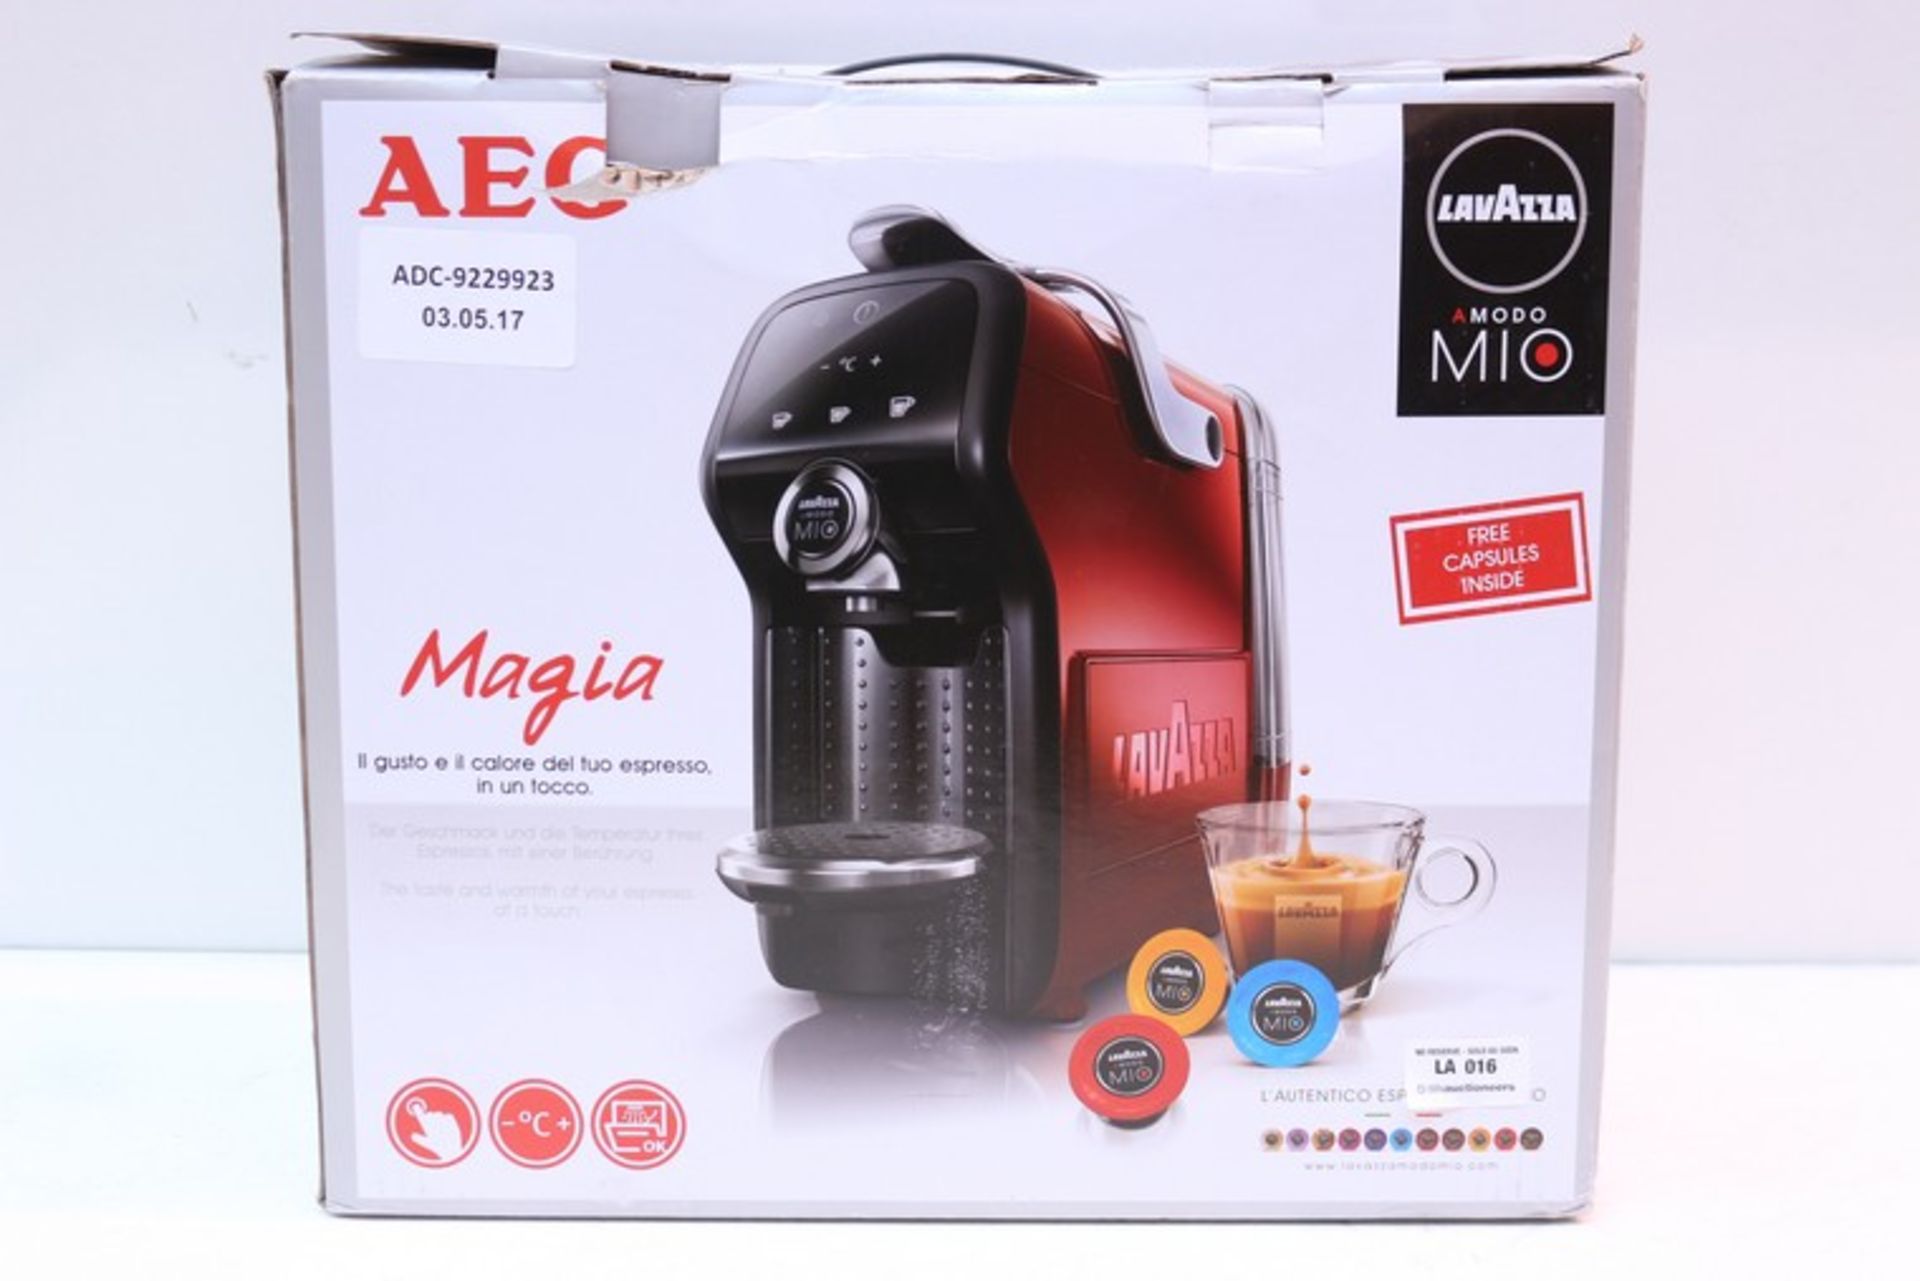 2 x BOXED AEG AMODO MIO LAVAZZA COFFEE MACHINES RRP £25 EACH (3.5.17) *PLEASE NOTE THAT THE BID